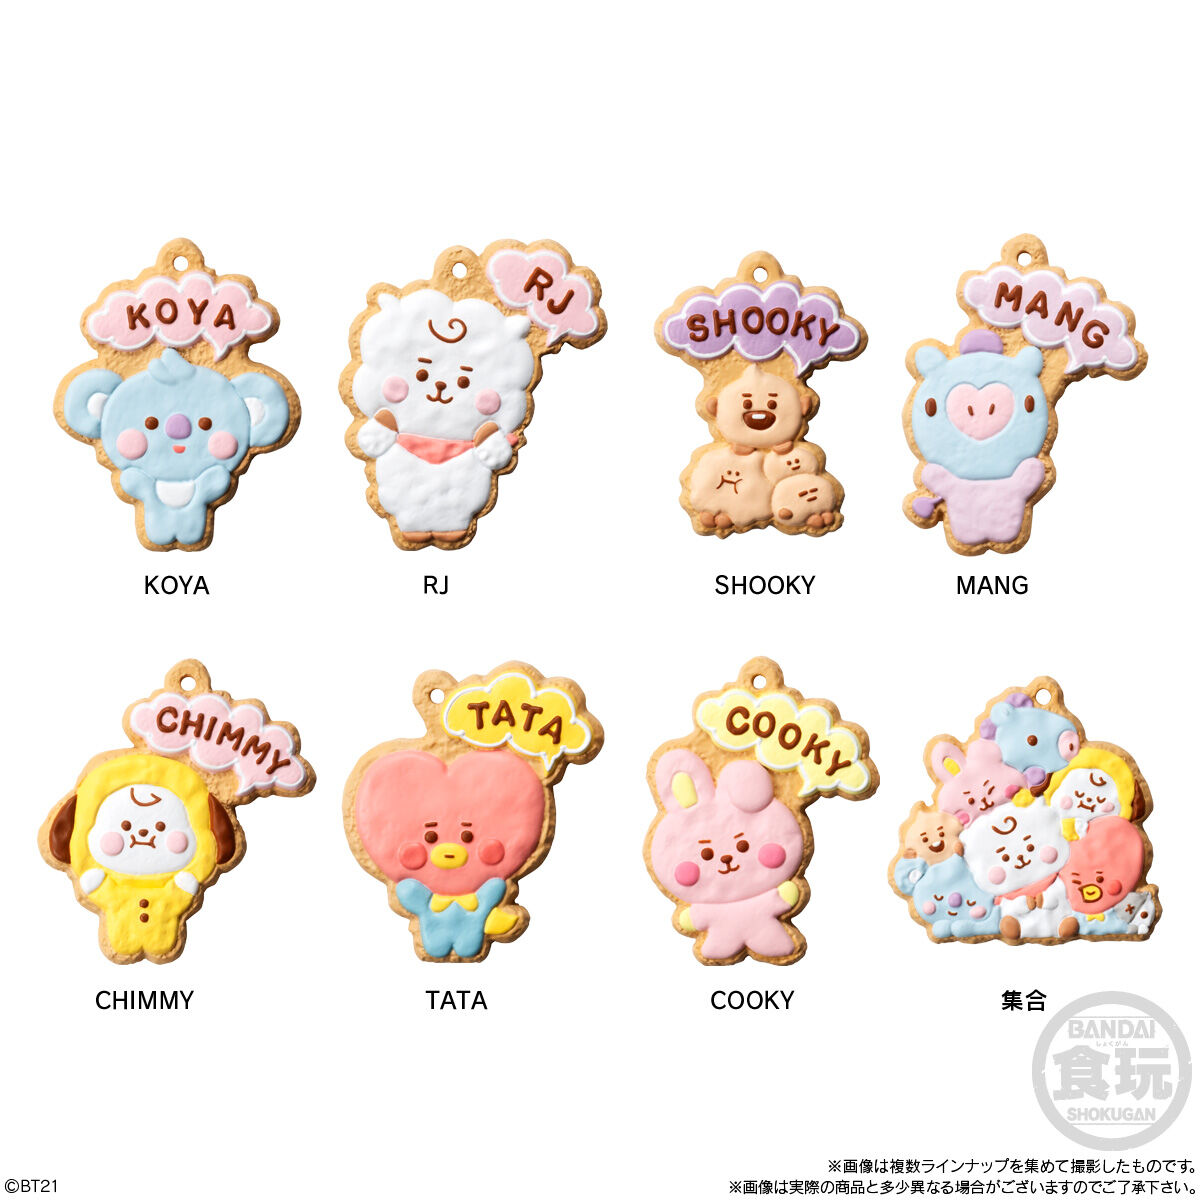 Bt21 クッキーチャームコット 発売日 21年10月26日 バンダイ キャンディ公式サイト